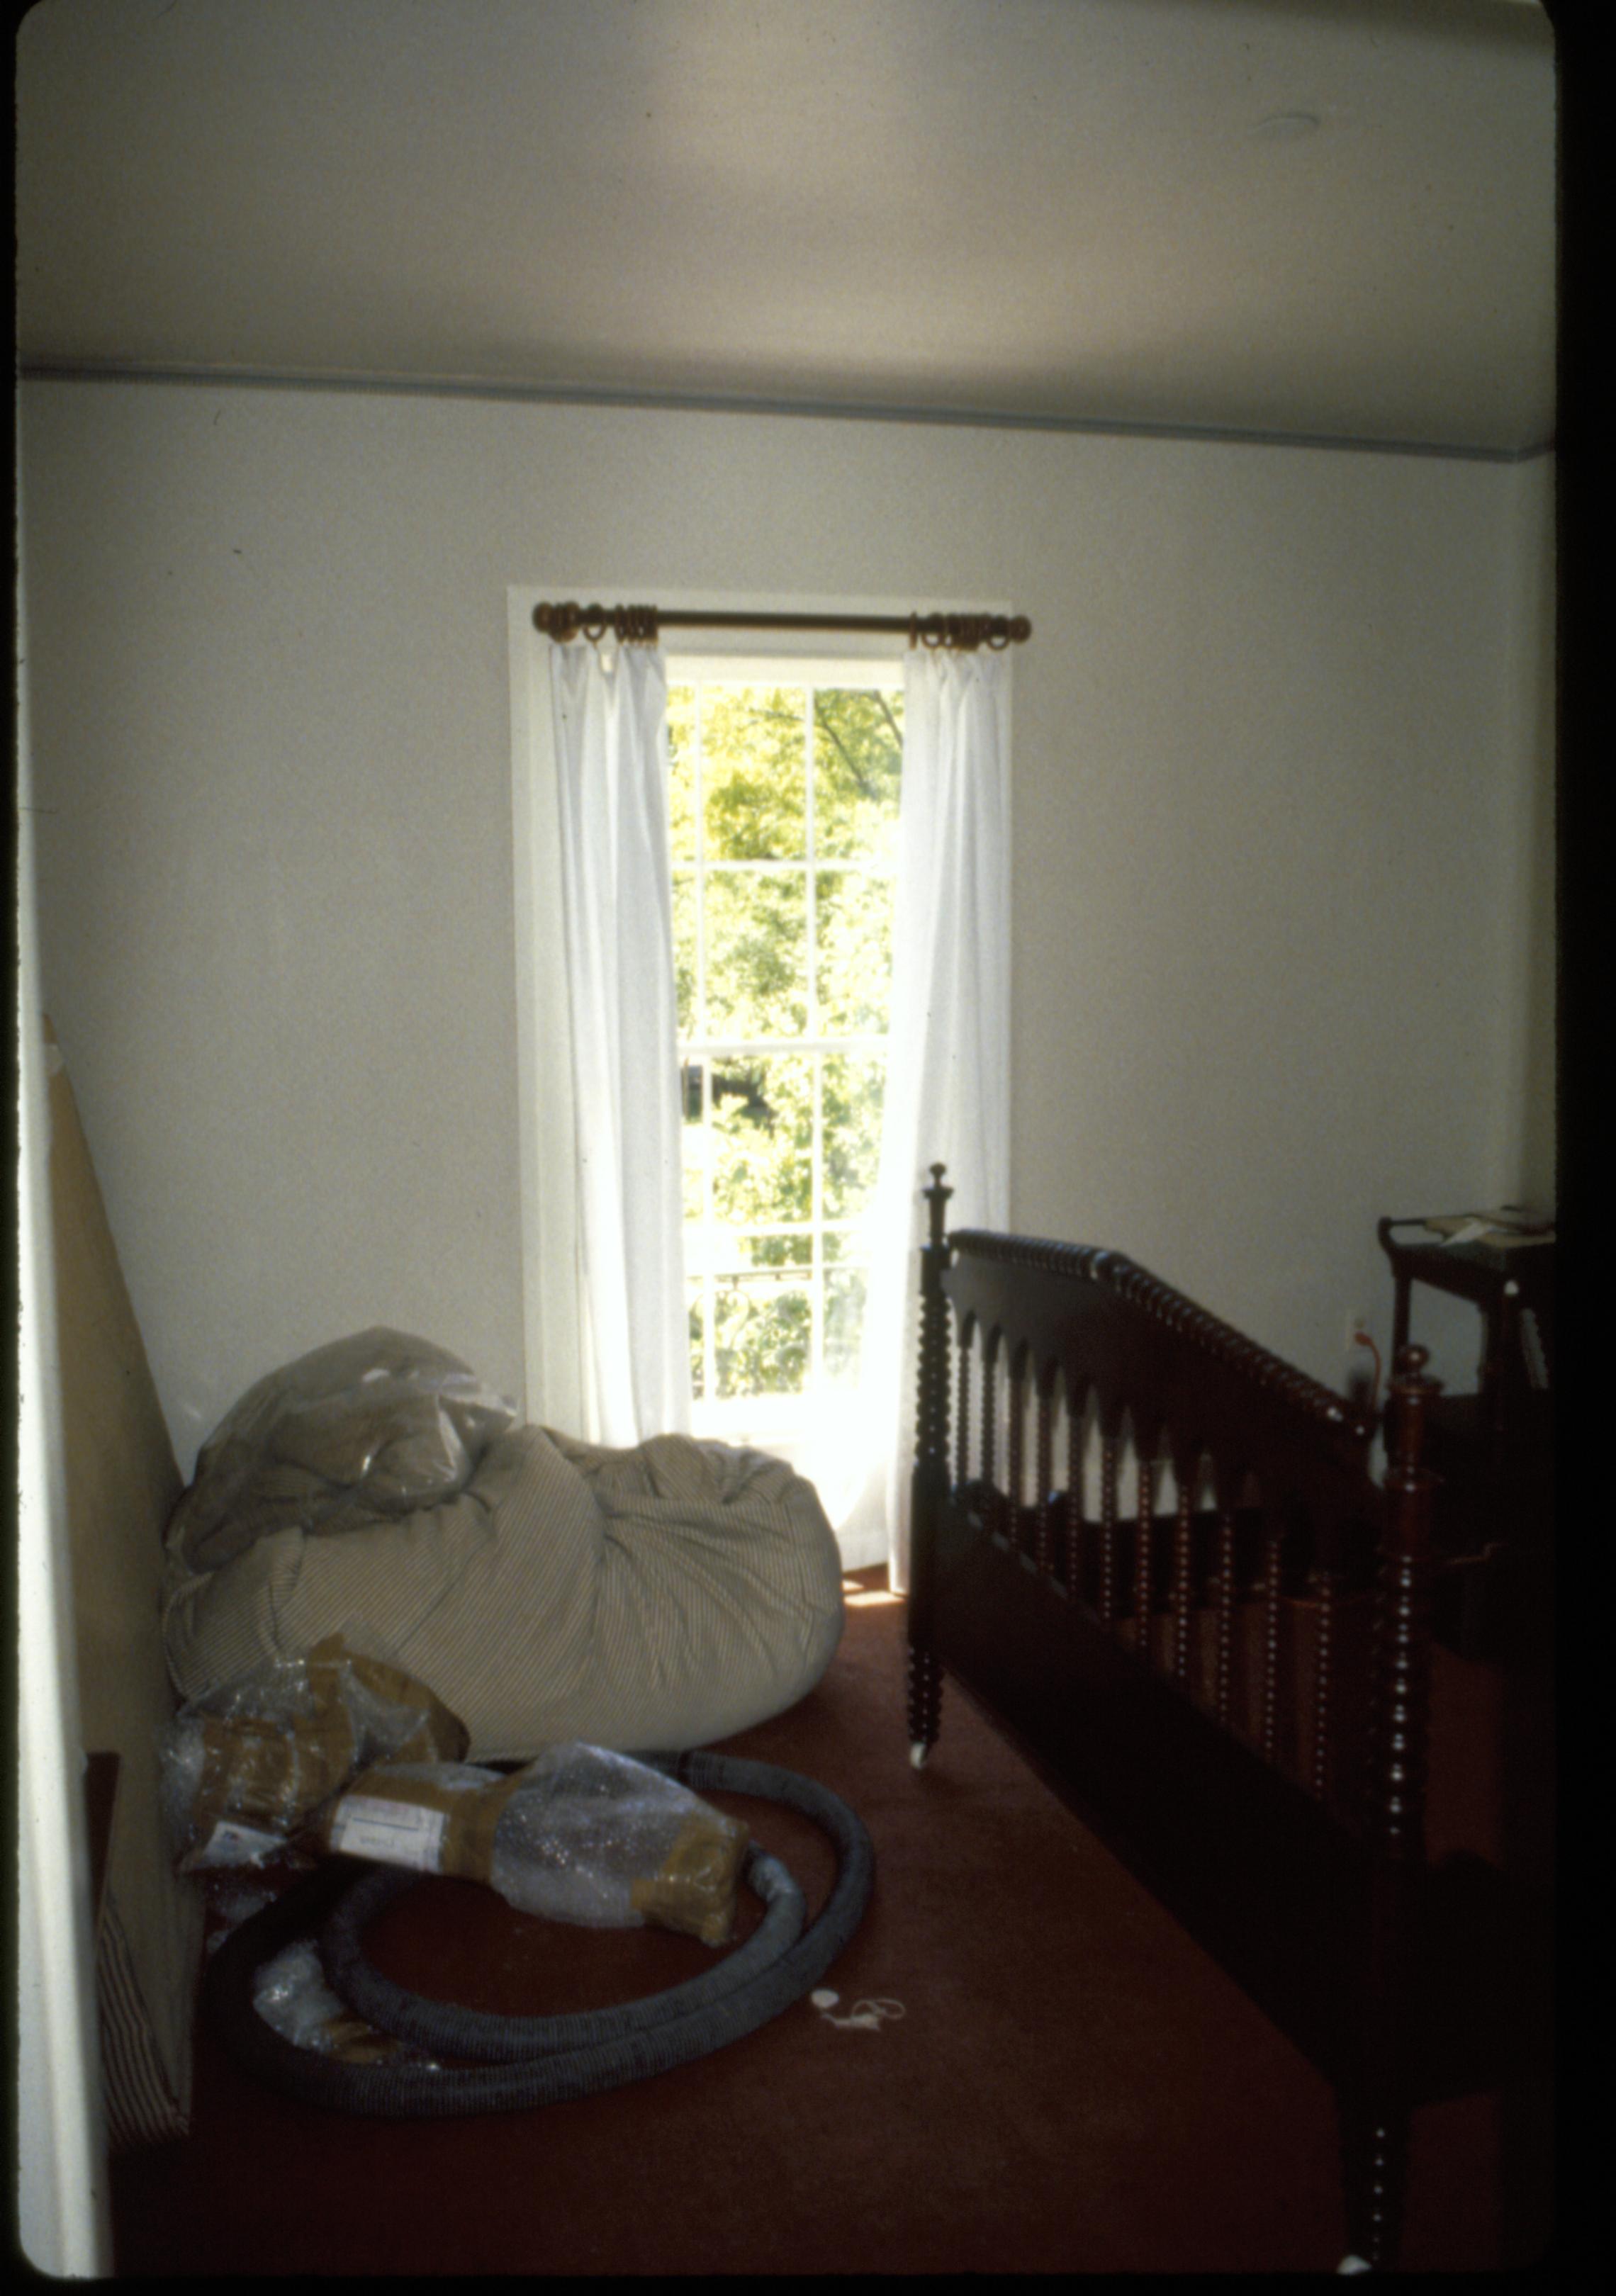 NA Lincoln, Home, restoration, bedroom, Boy's